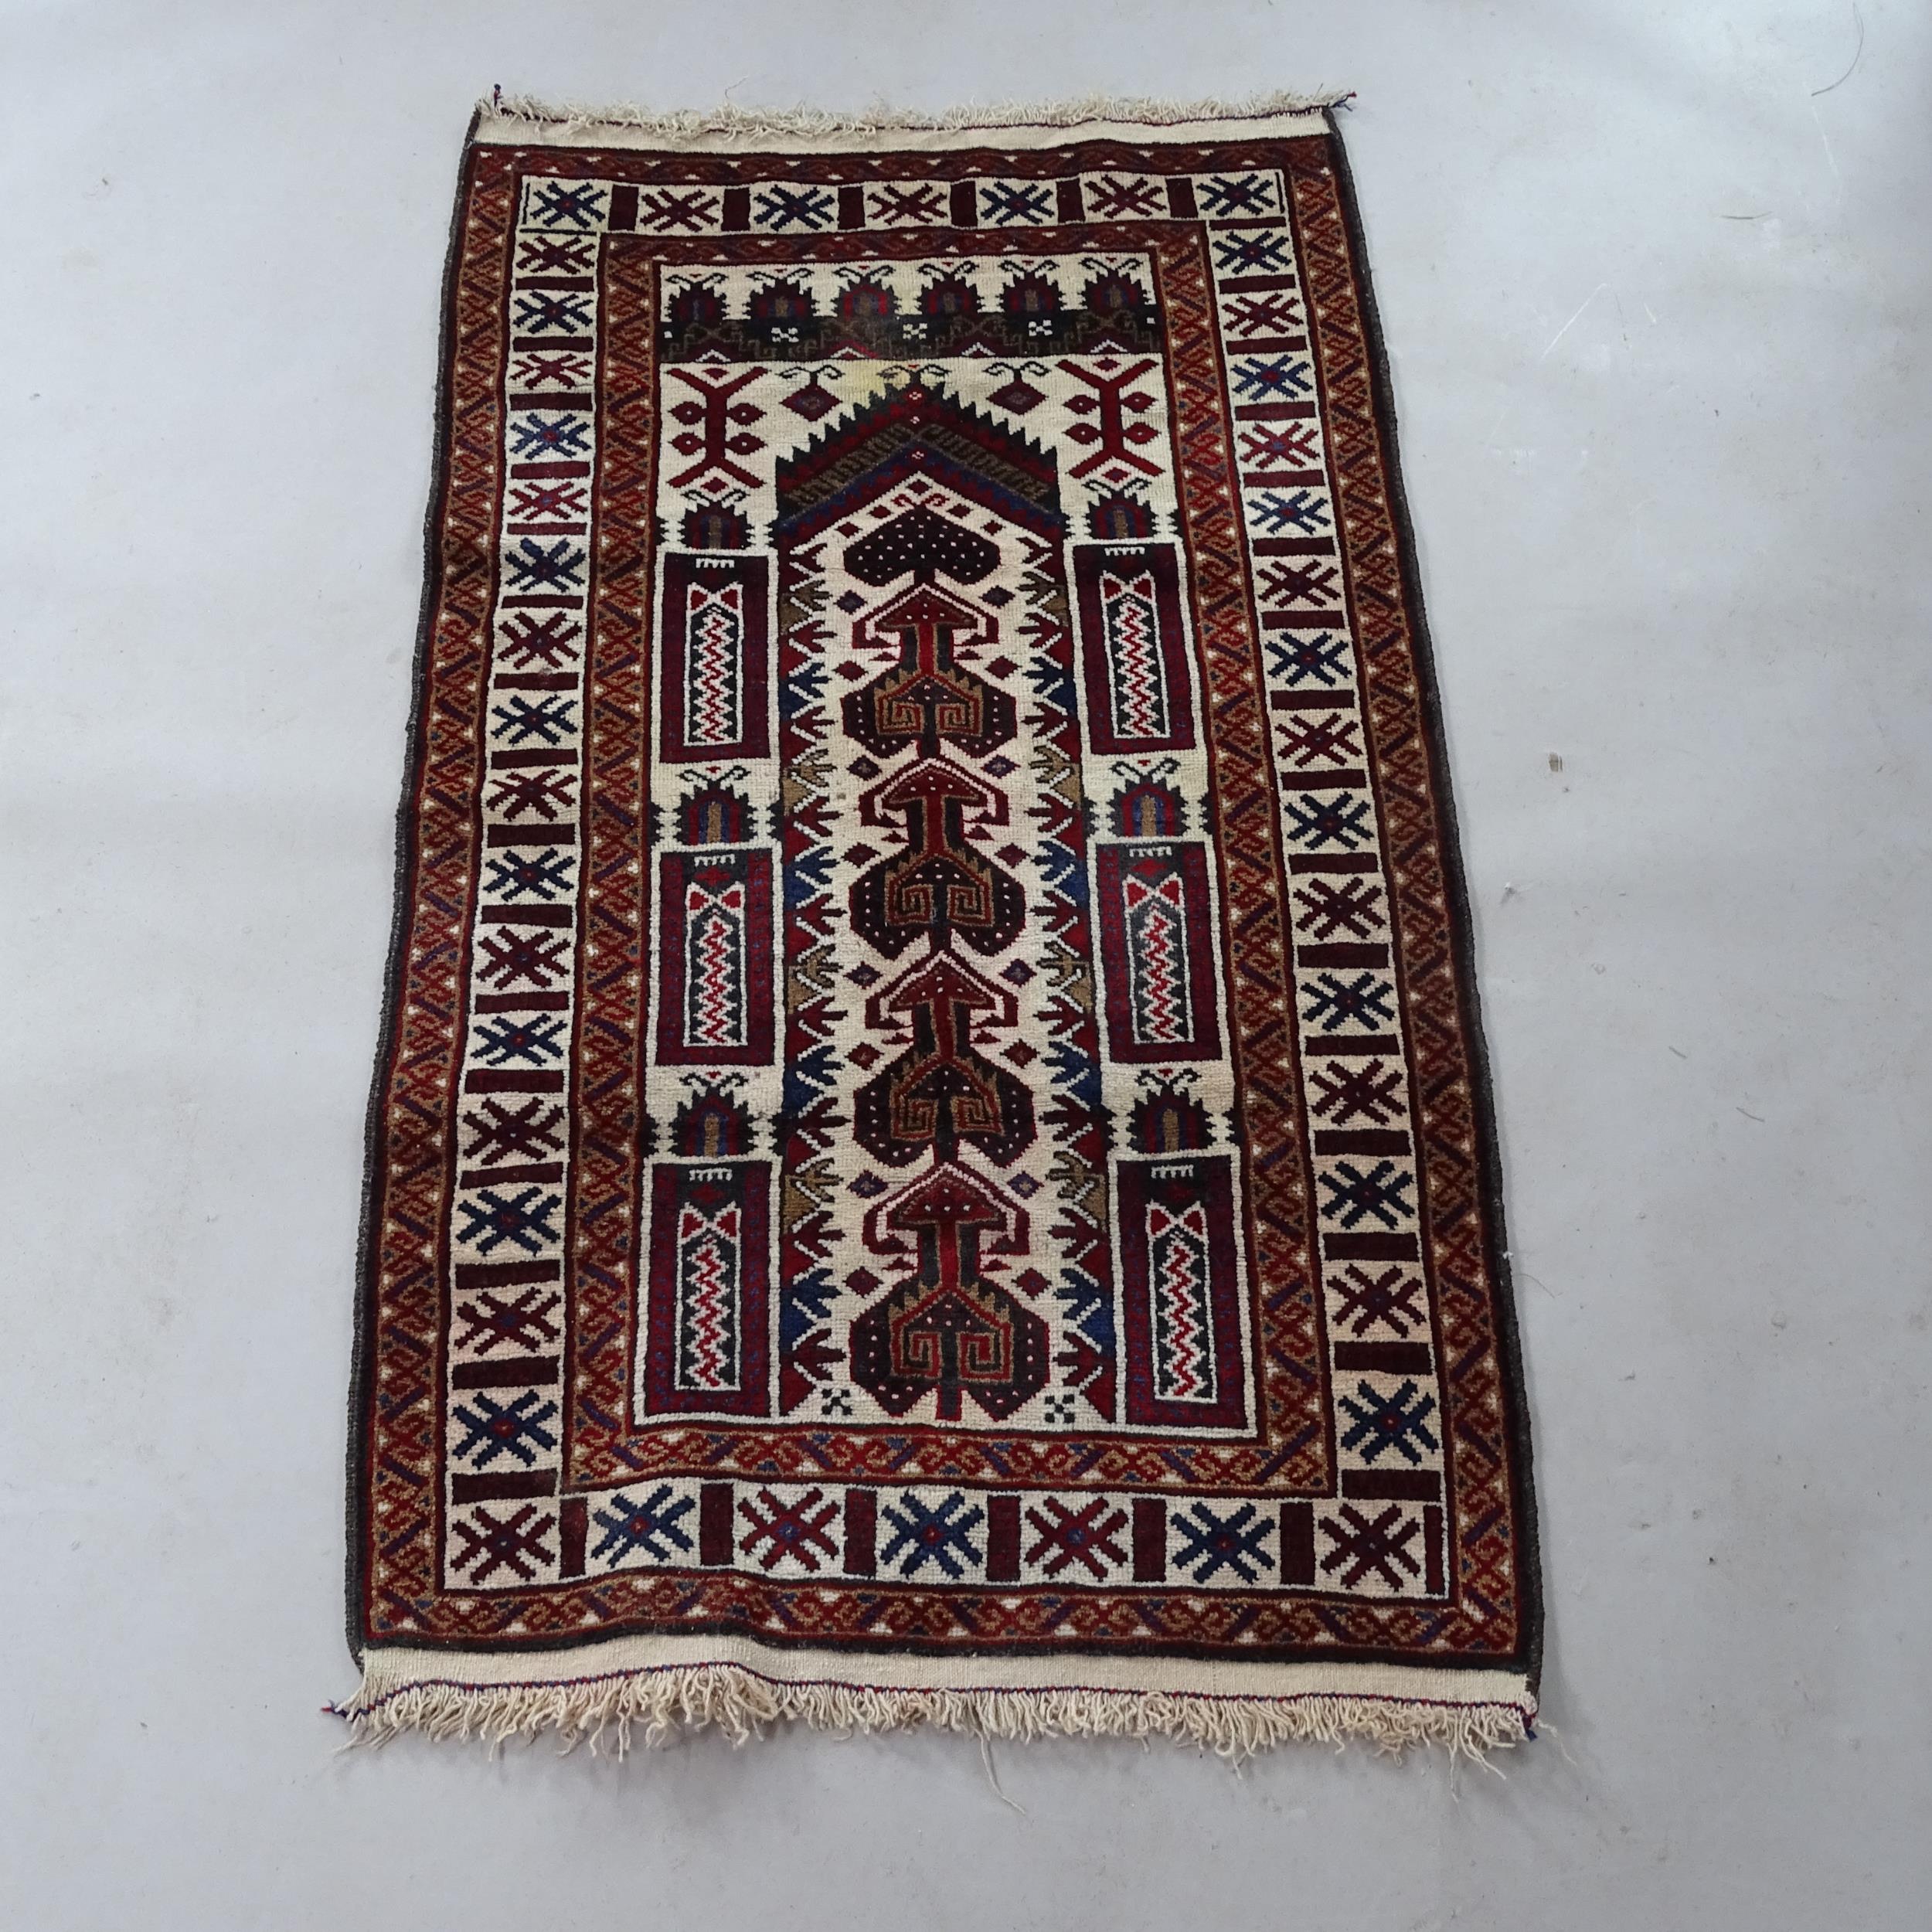 A red and cream ground Afghan prayer rug, 150cm x 83cm